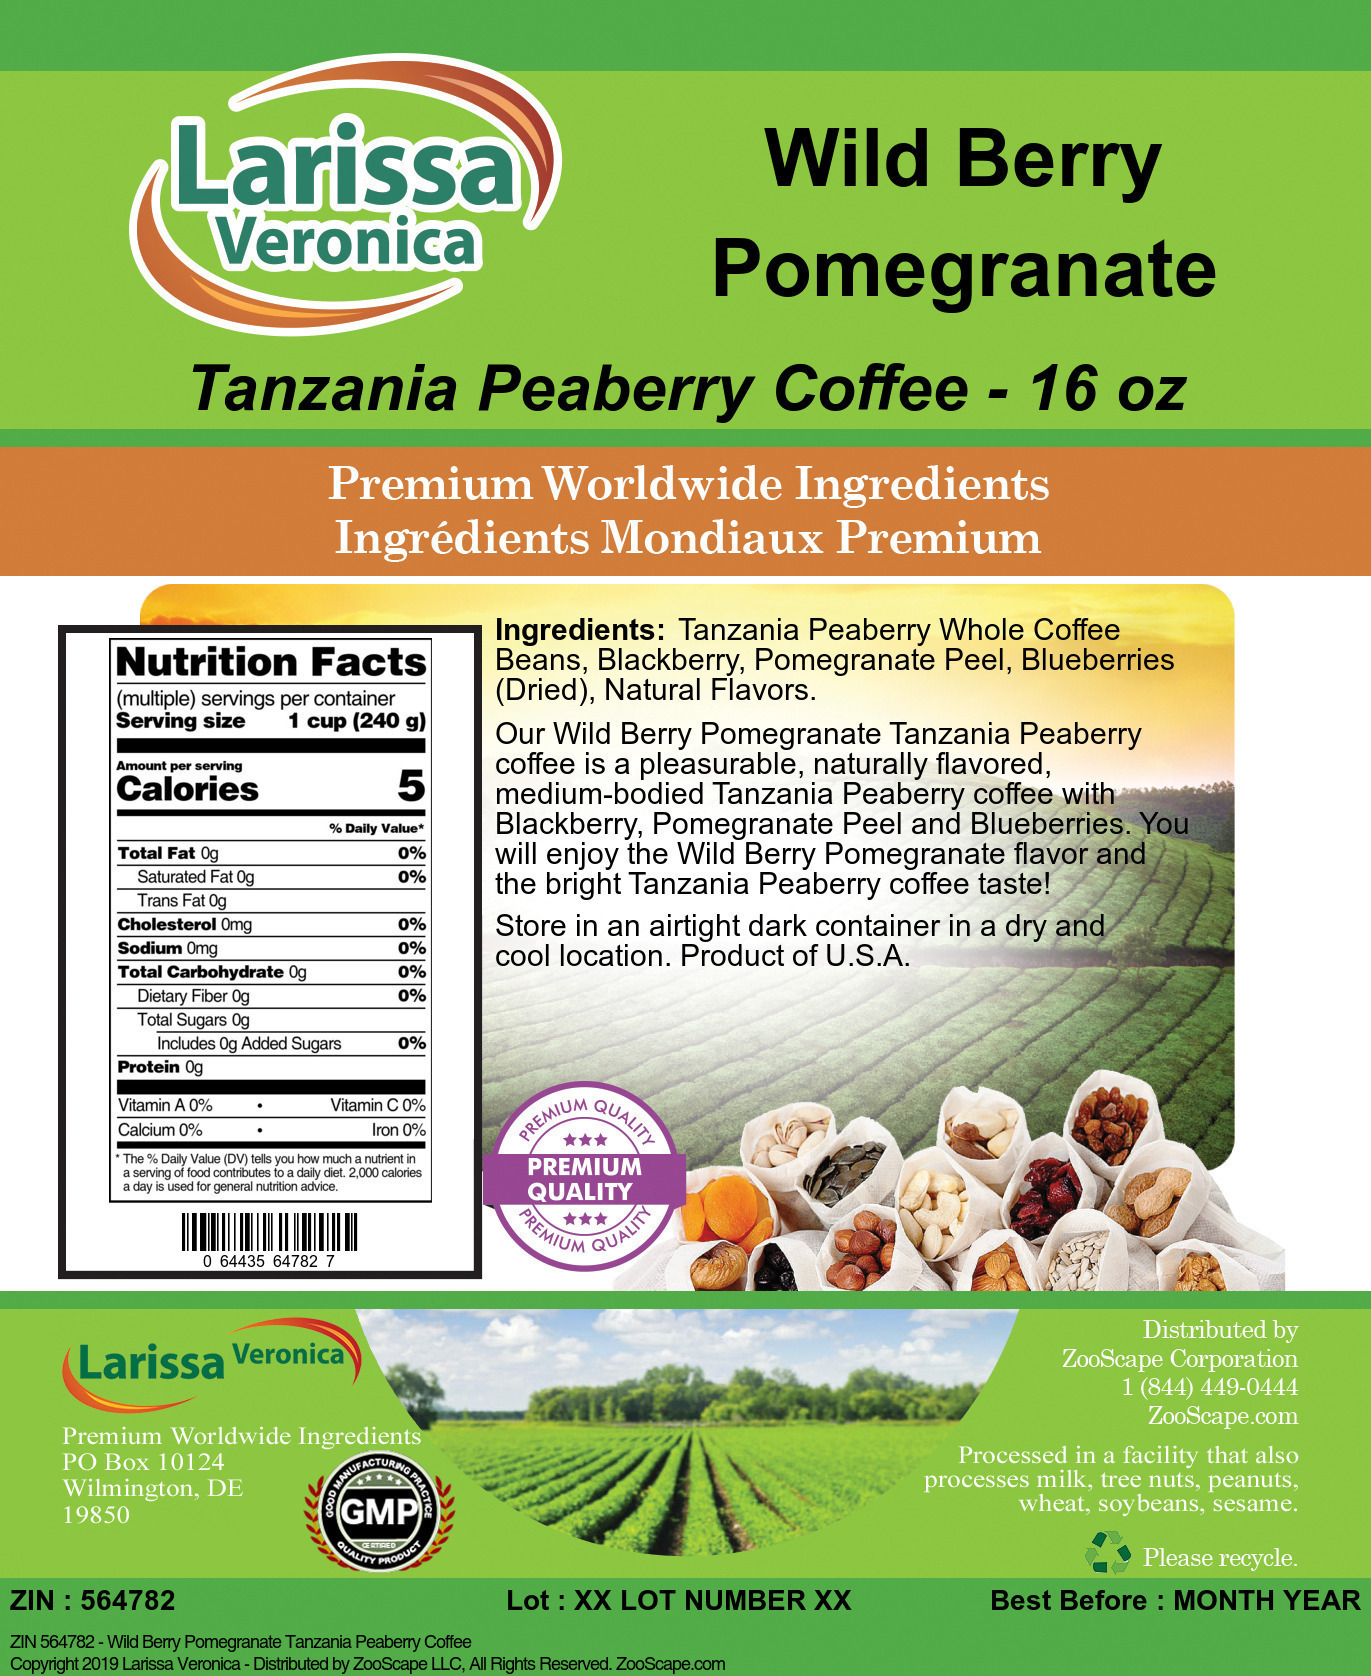 Wild Berry Pomegranate Tanzania Peaberry Coffee - Label